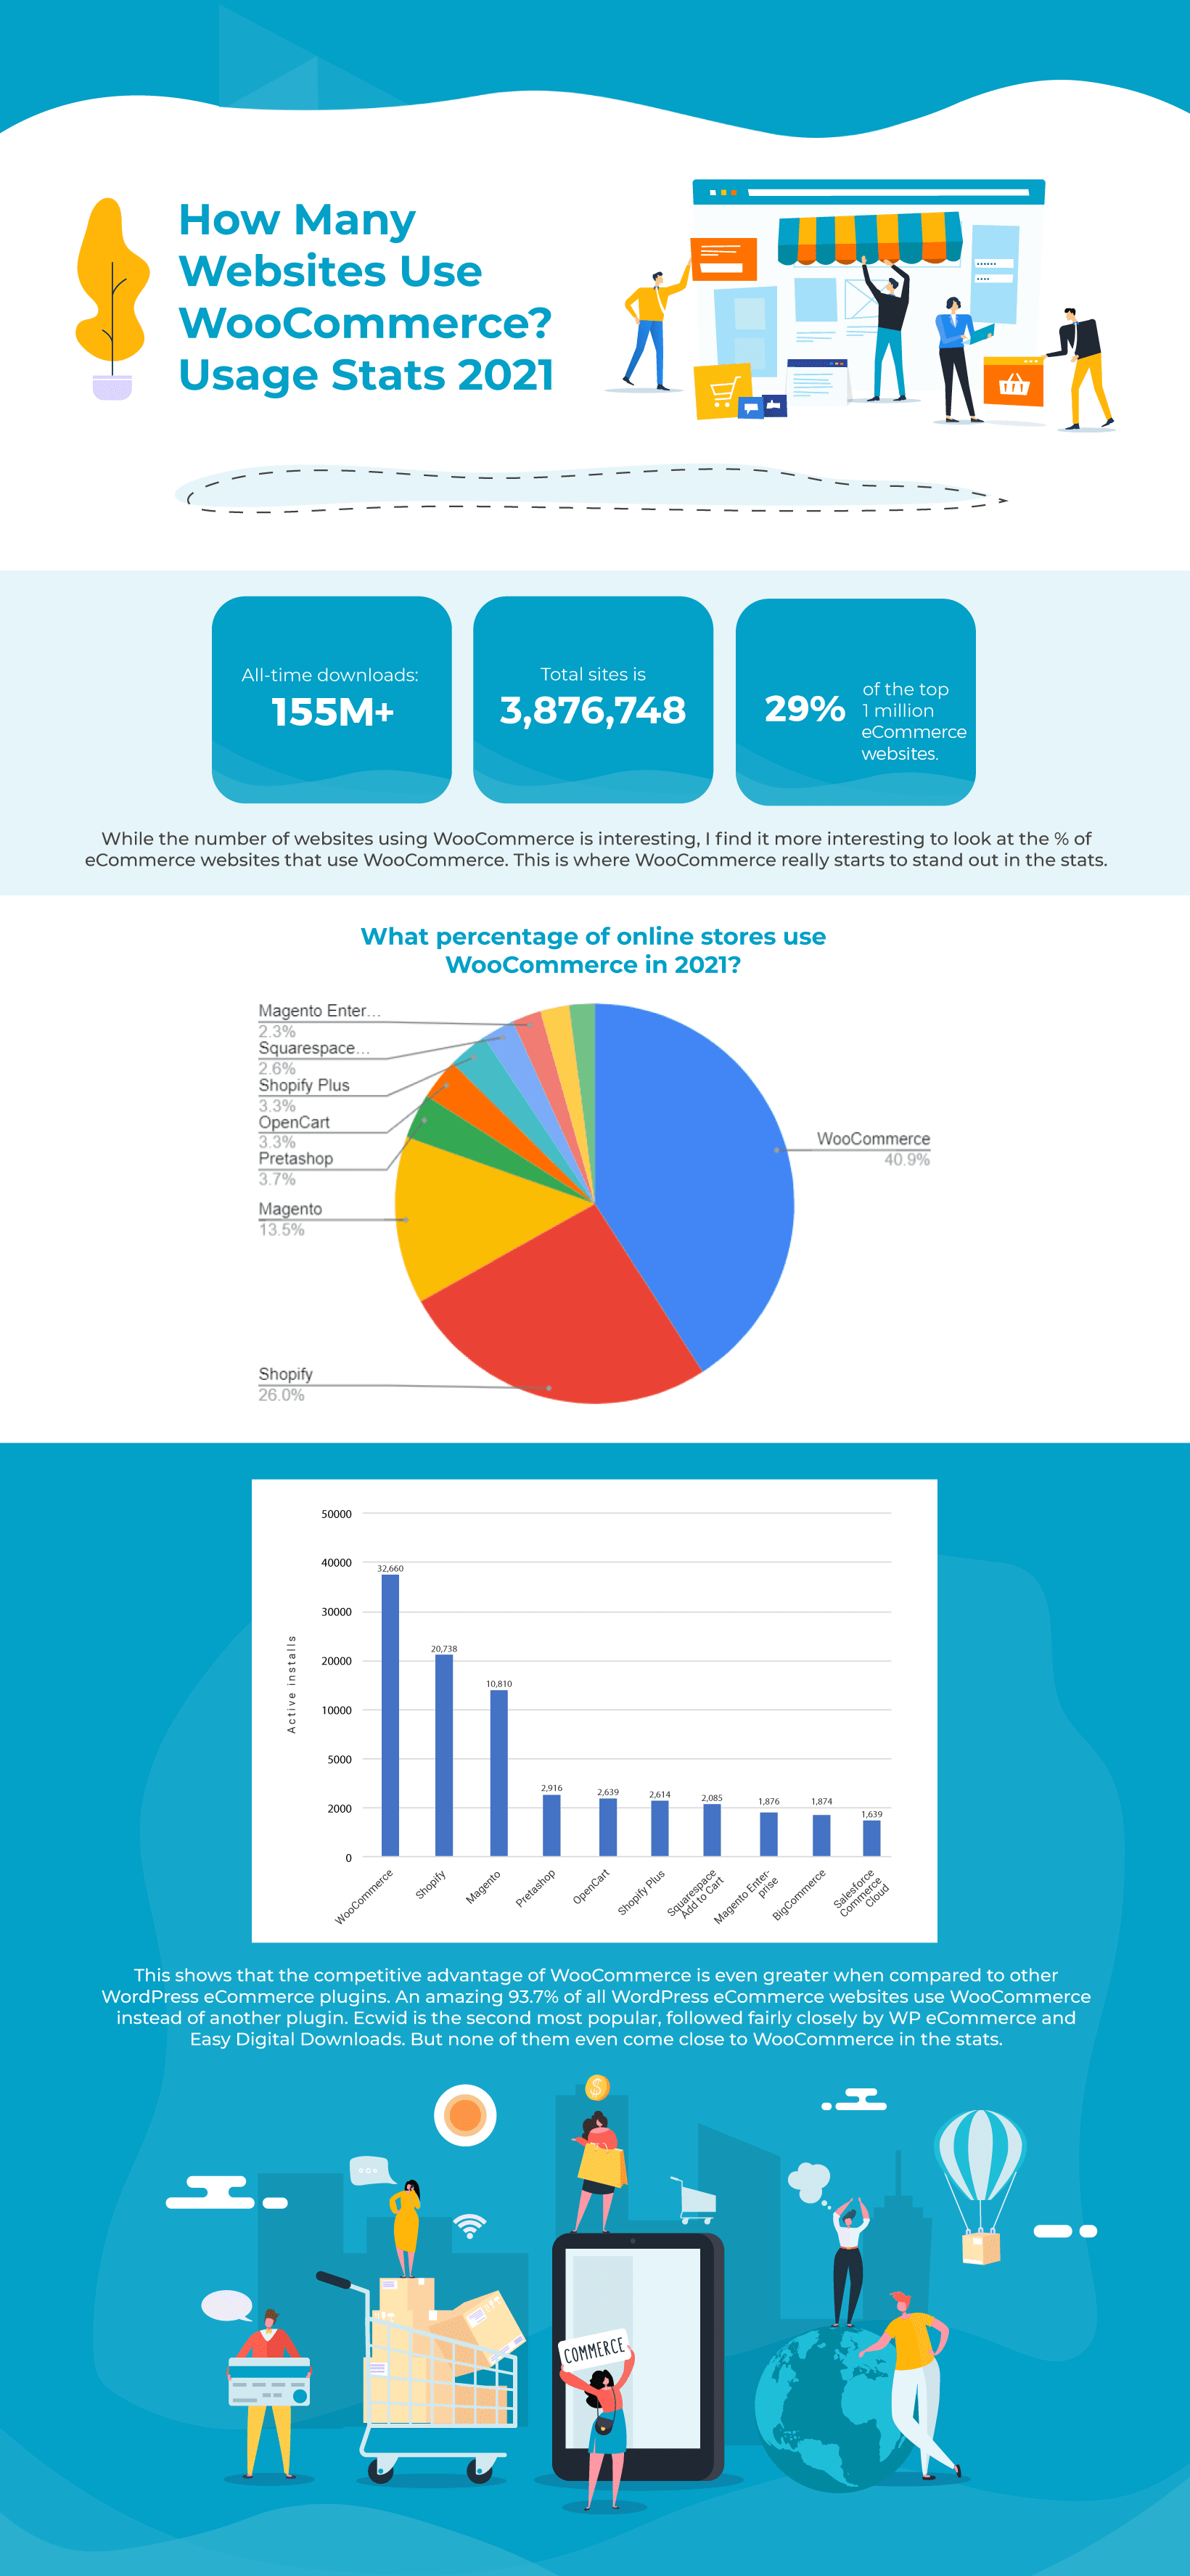 WooCommerce Usage Stats Infographic - WooCommerce Usage Statistics   